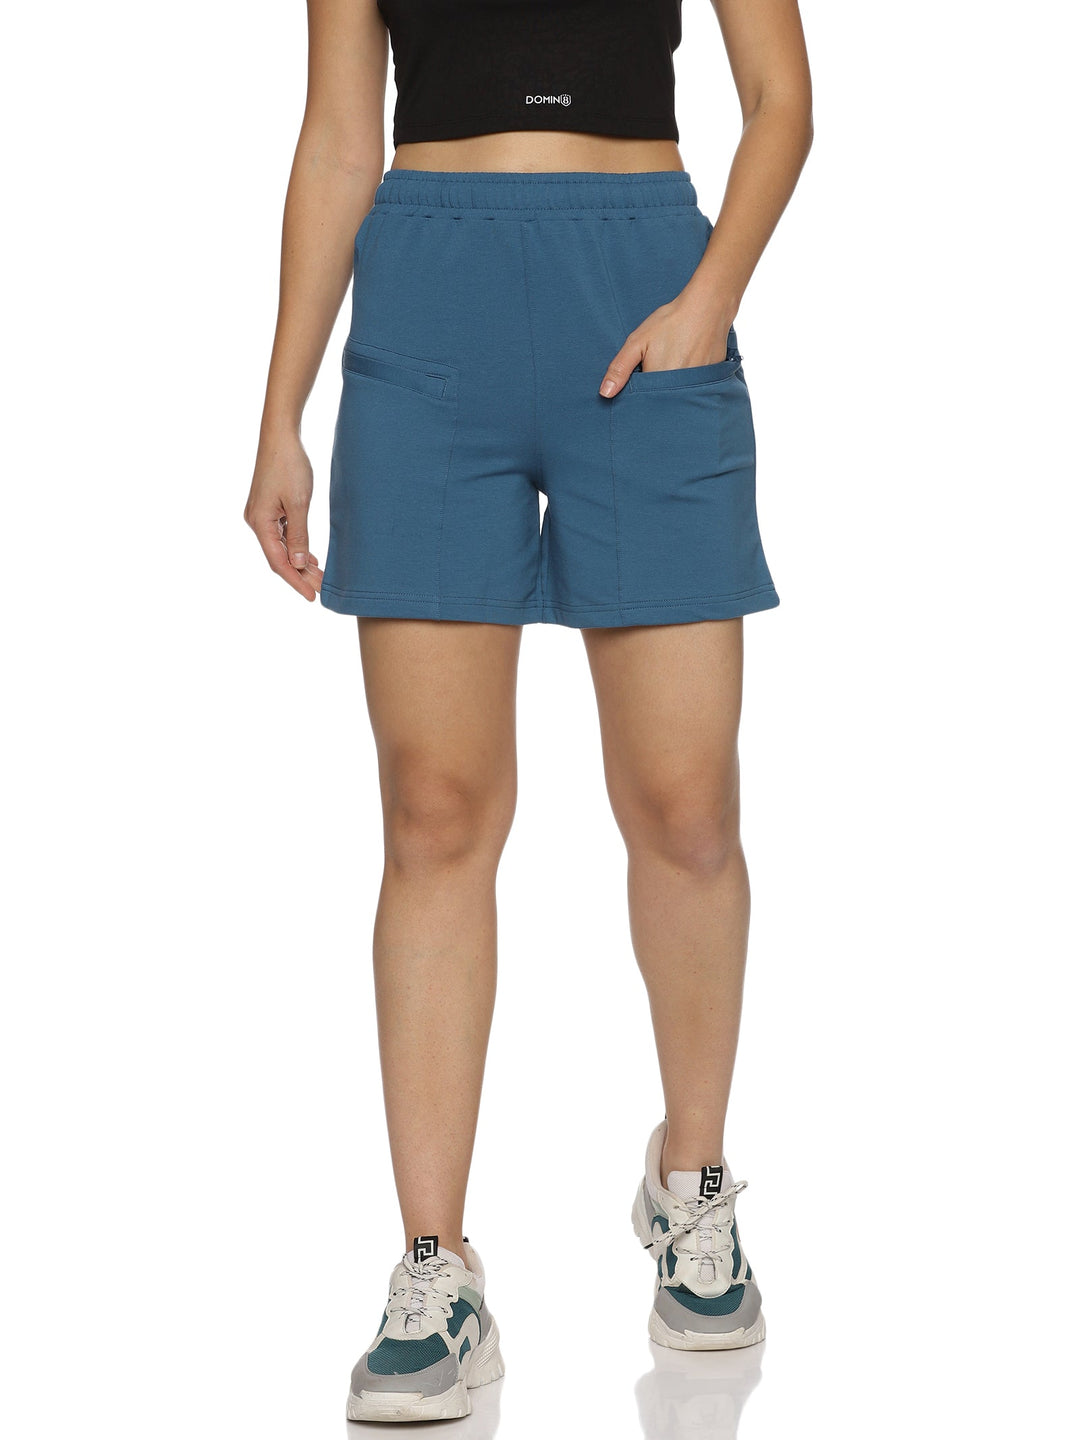 Women's Solid Training Shorts With Elasticated Drawstring Waist & Zipper Pockets (Blue)